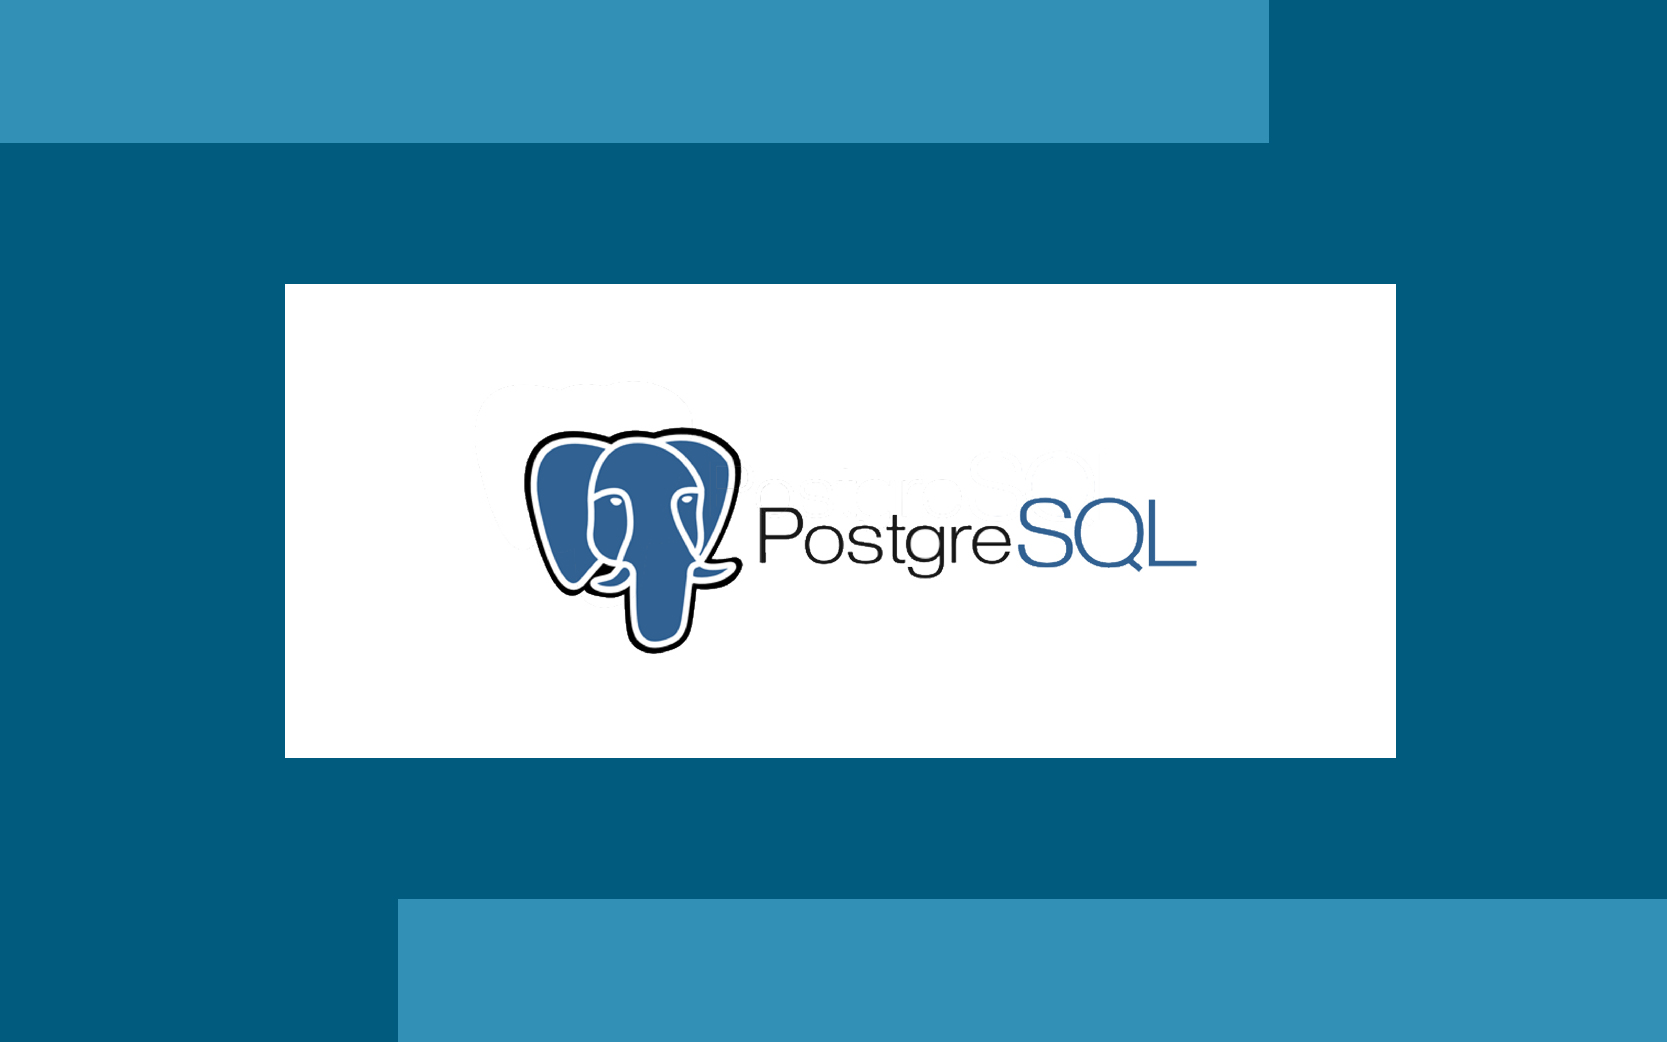 PostgreSQL-training-in-bangalore-by-zekelabs